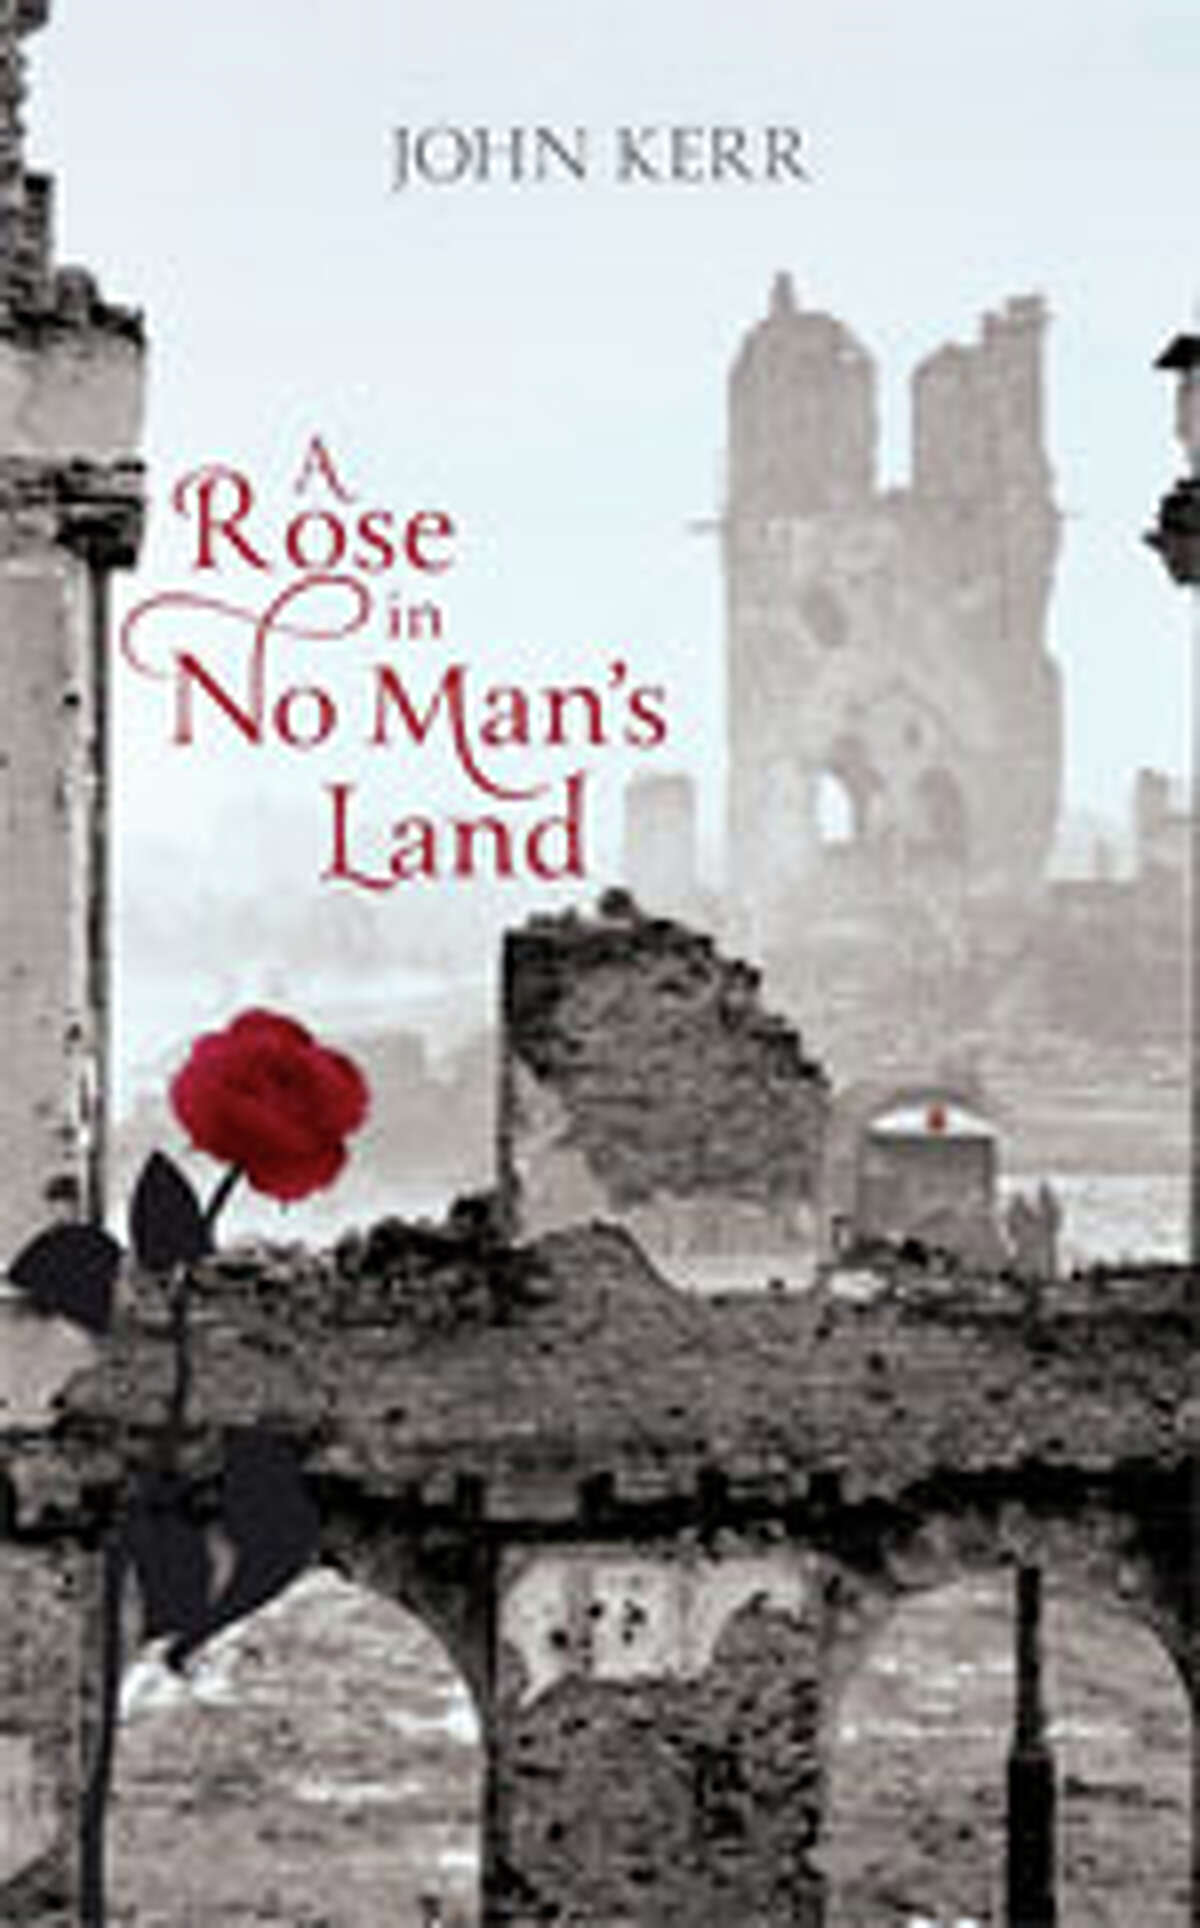 "A Rose In No Man's Land" by John Kerr